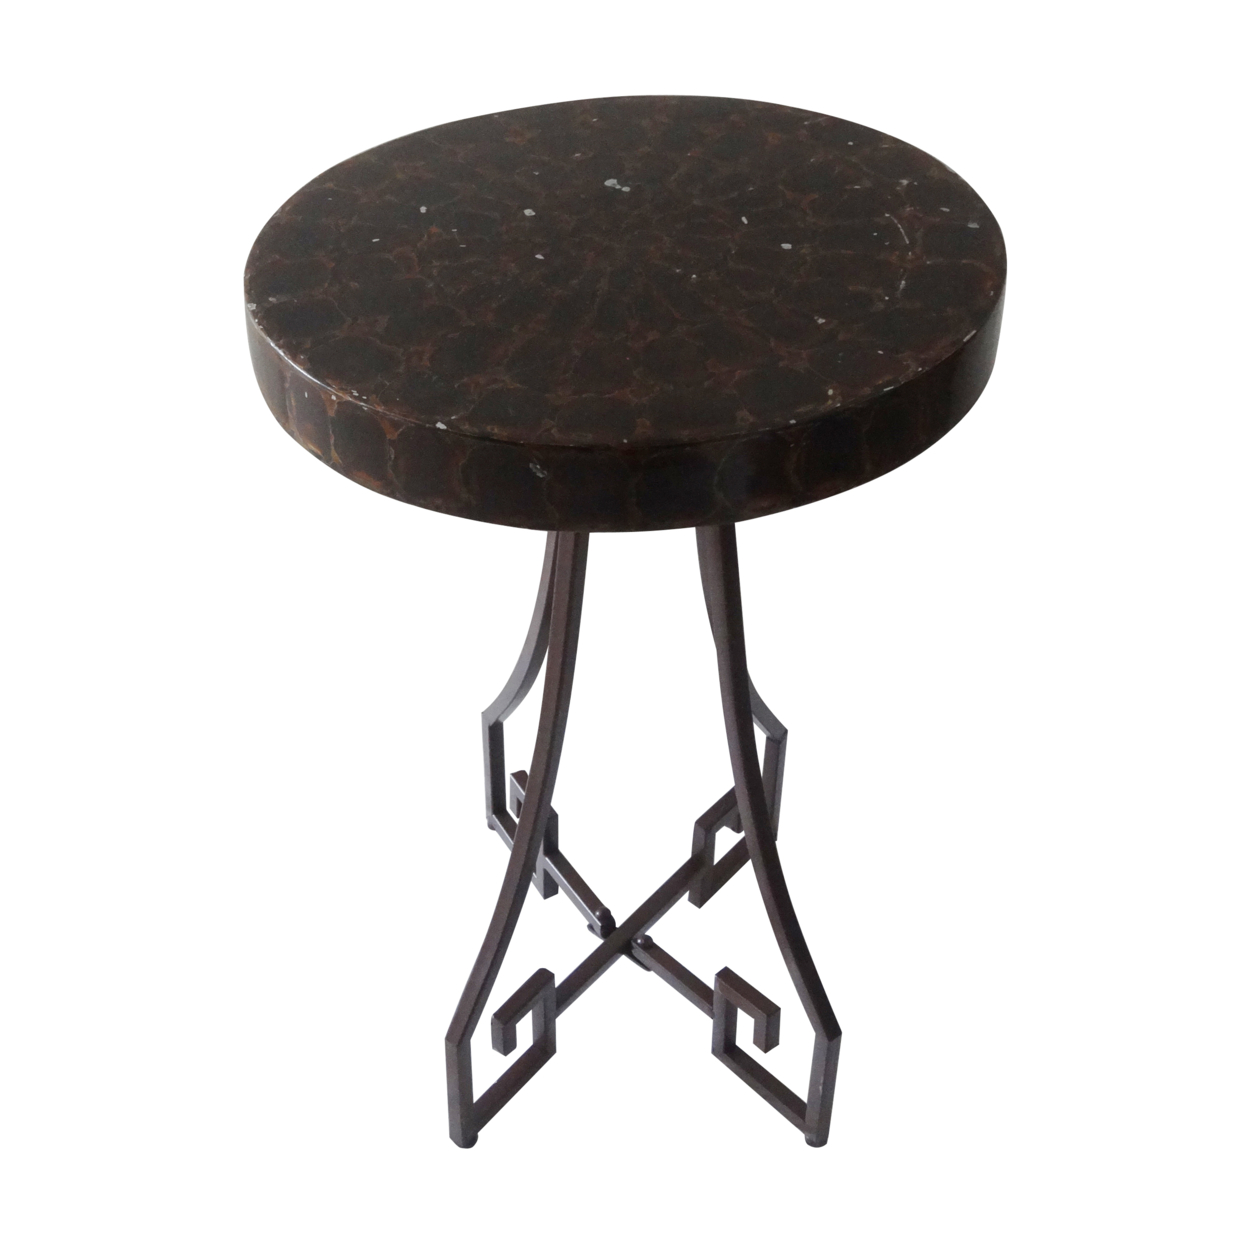 Designer Metal Base Table With Textured MDF Top, Black And Brown- Saltoro Sherpi